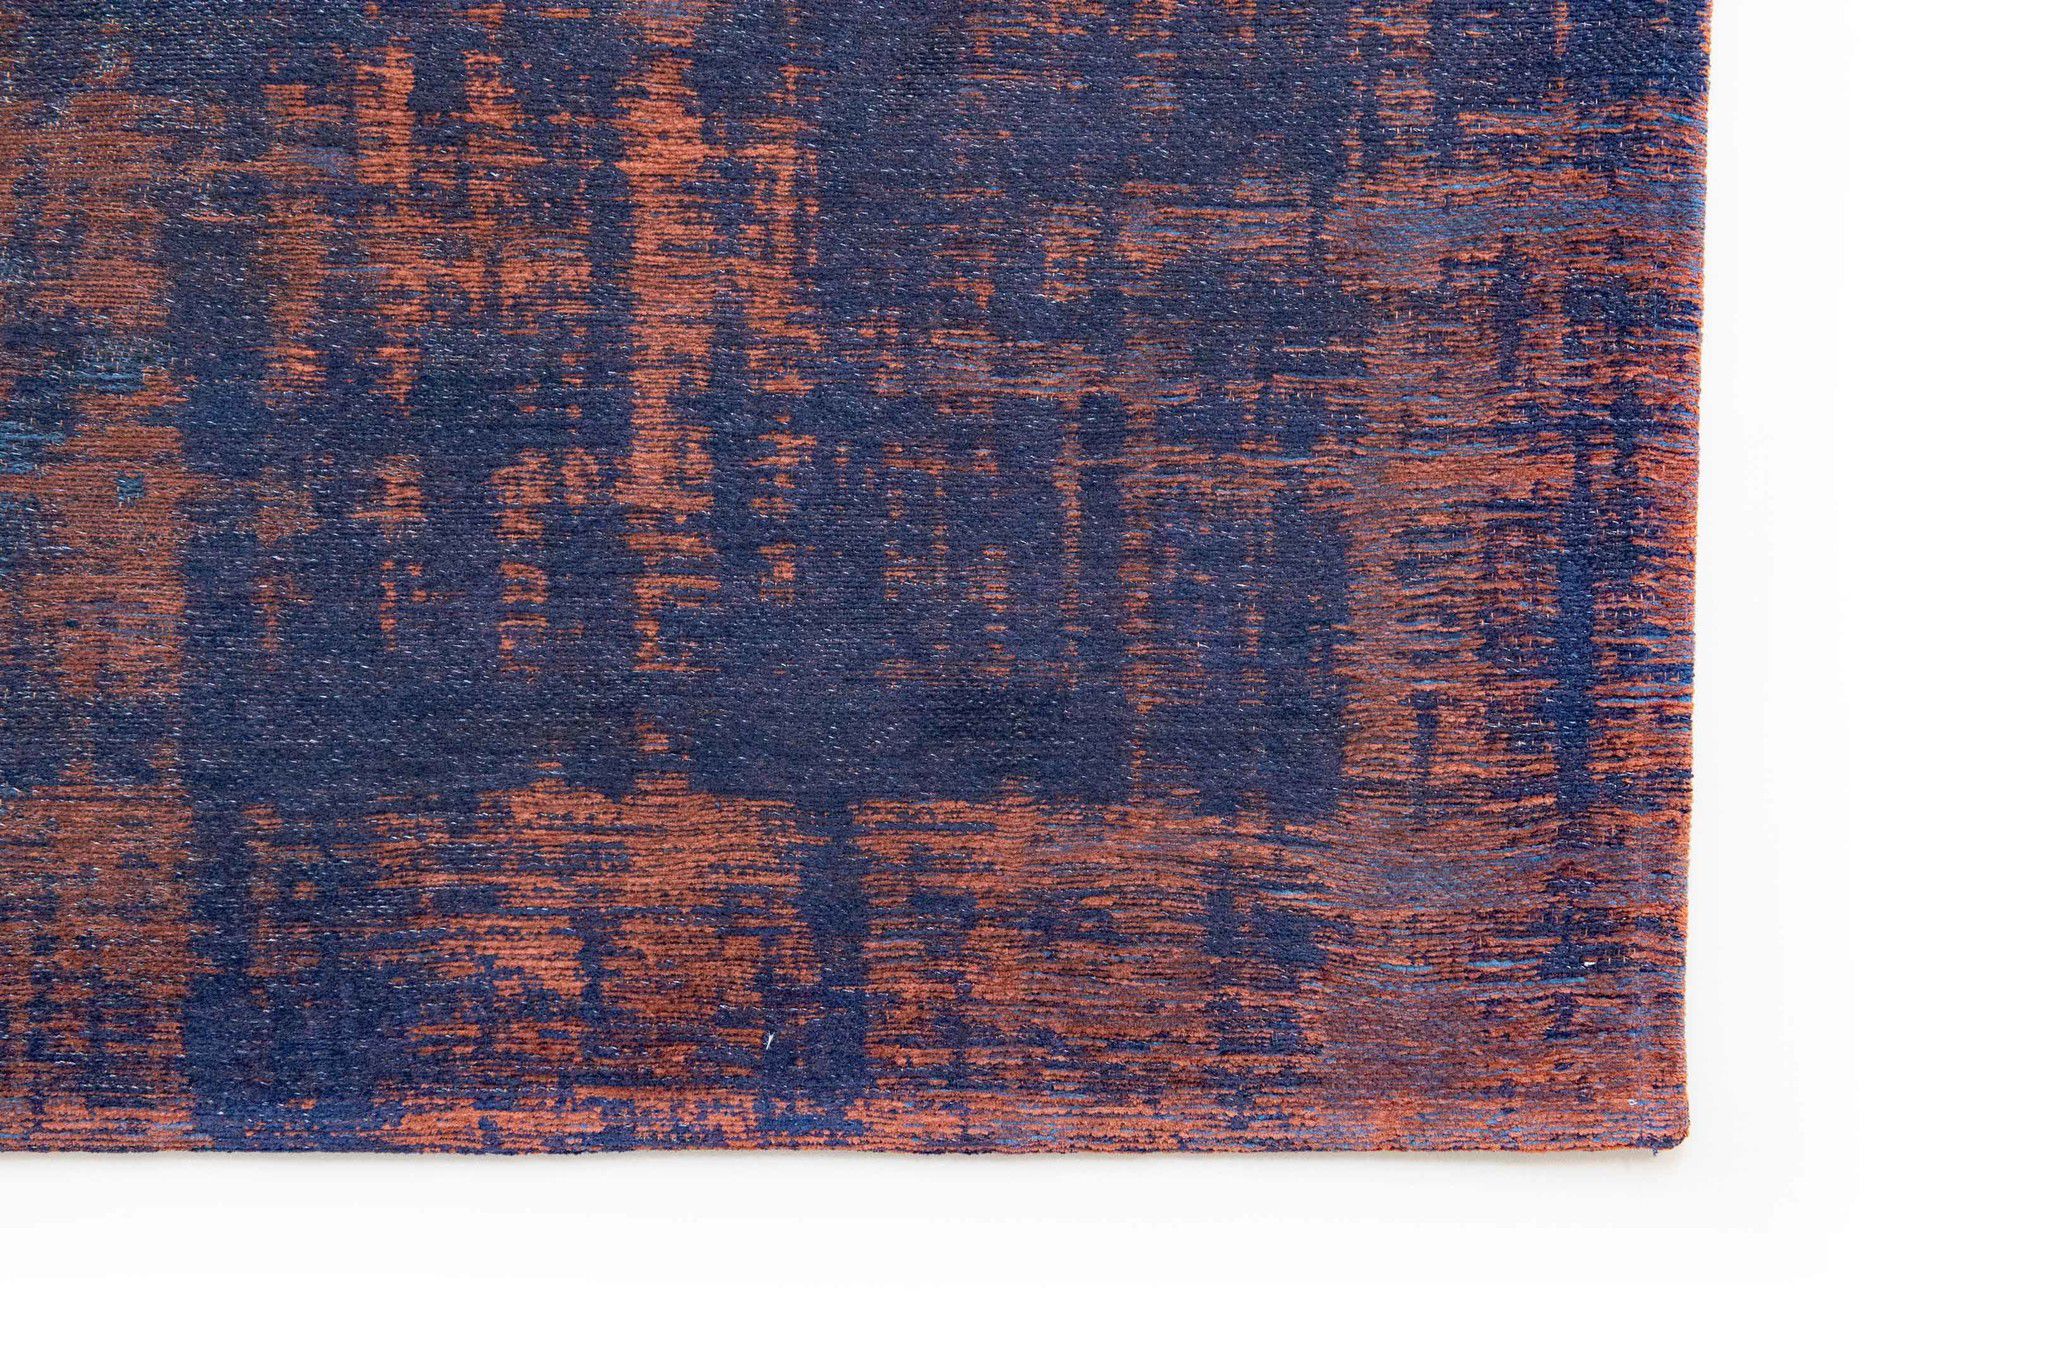 vloerkleed louis de poortere venetian dust sunset blue 140cm x 200cm